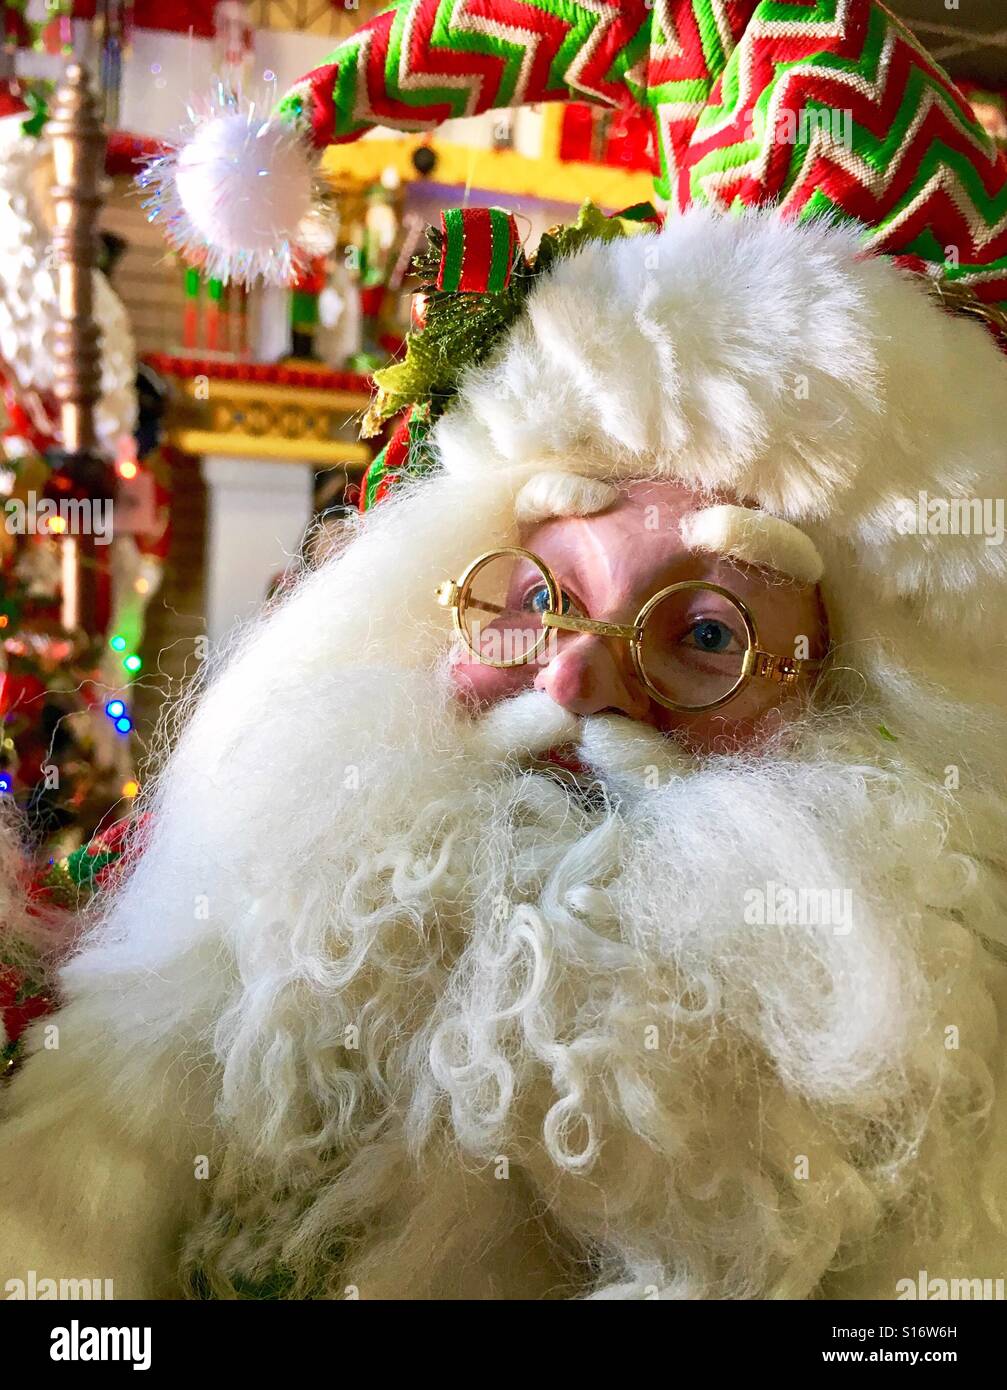 Santa Claus Stockfoto